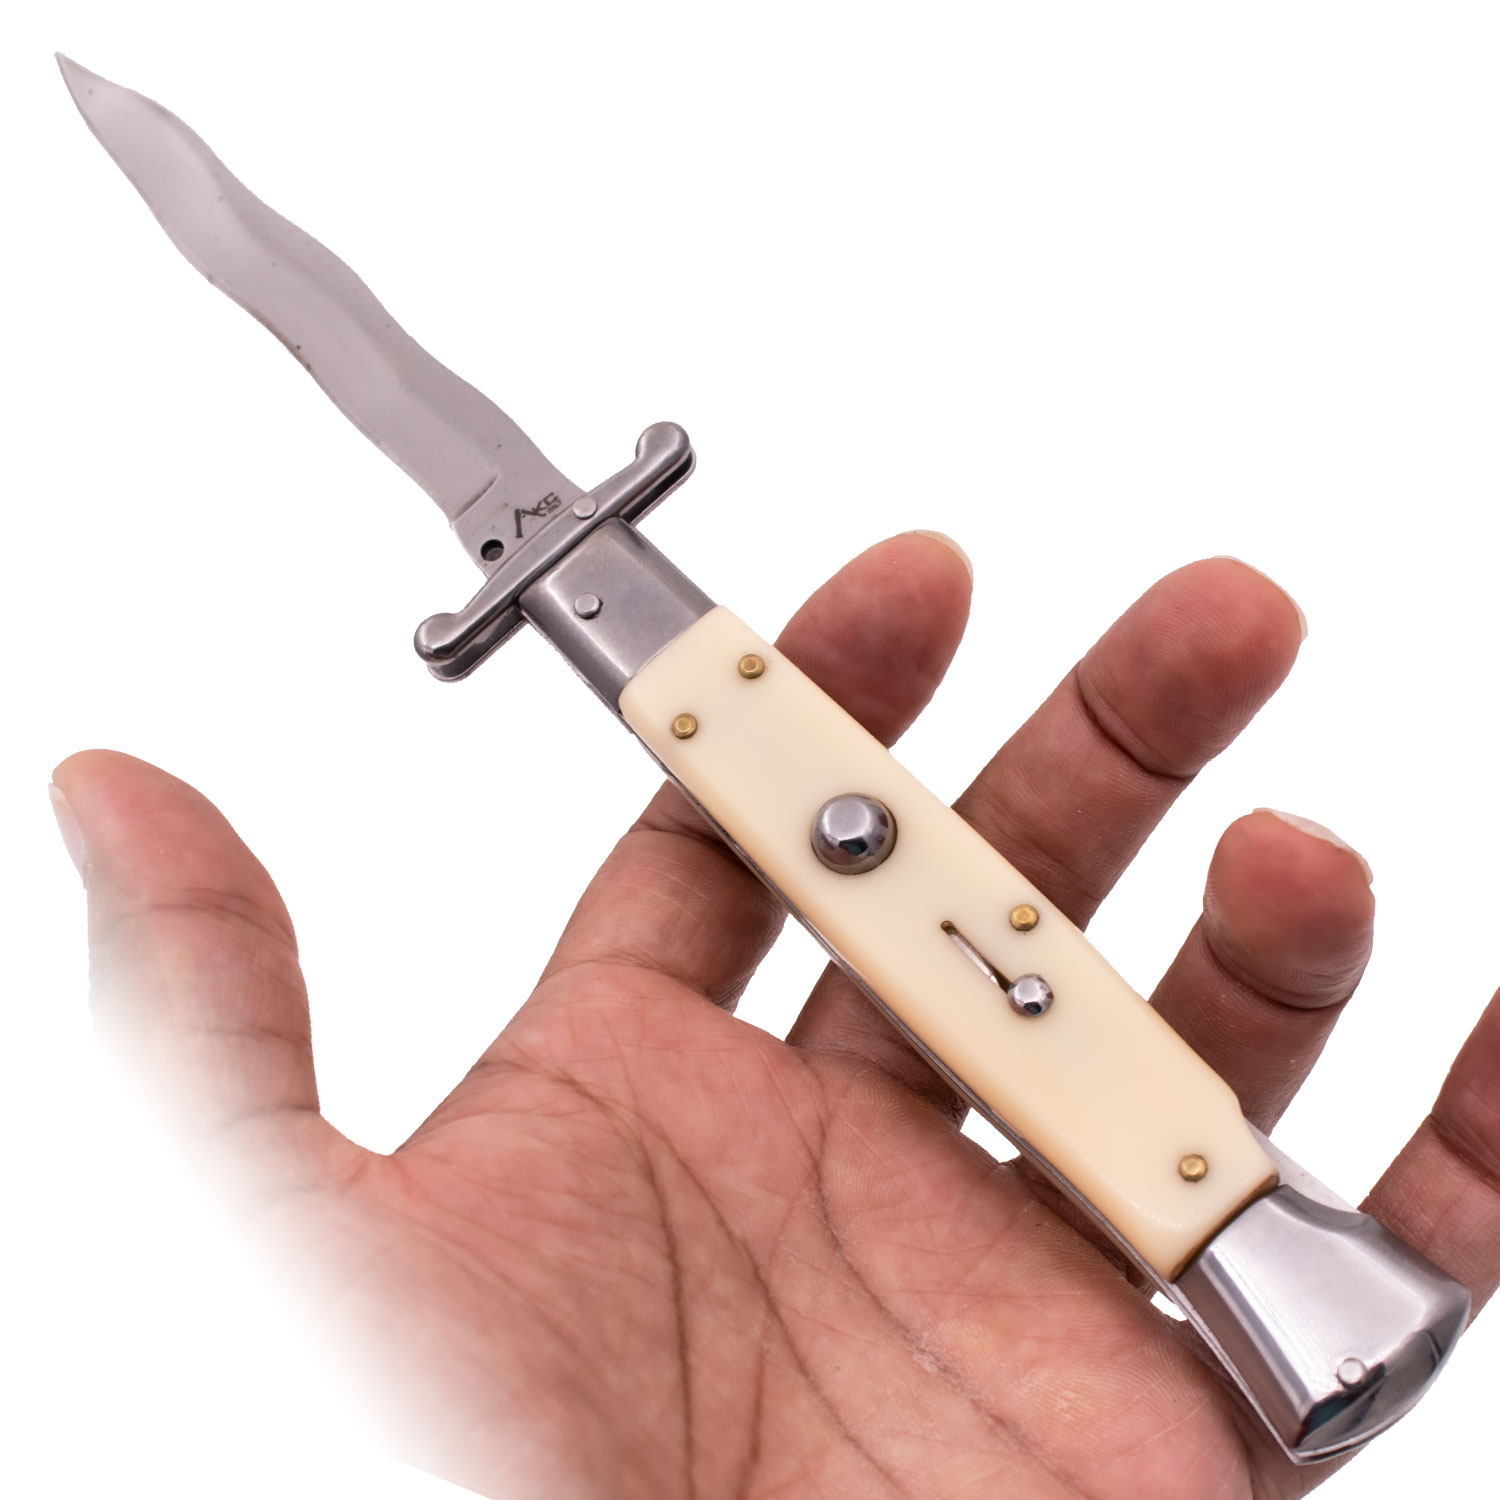 AKC 9.60 Inch Automatic Italiano Knife with Guard Kriss (Wild Bone)